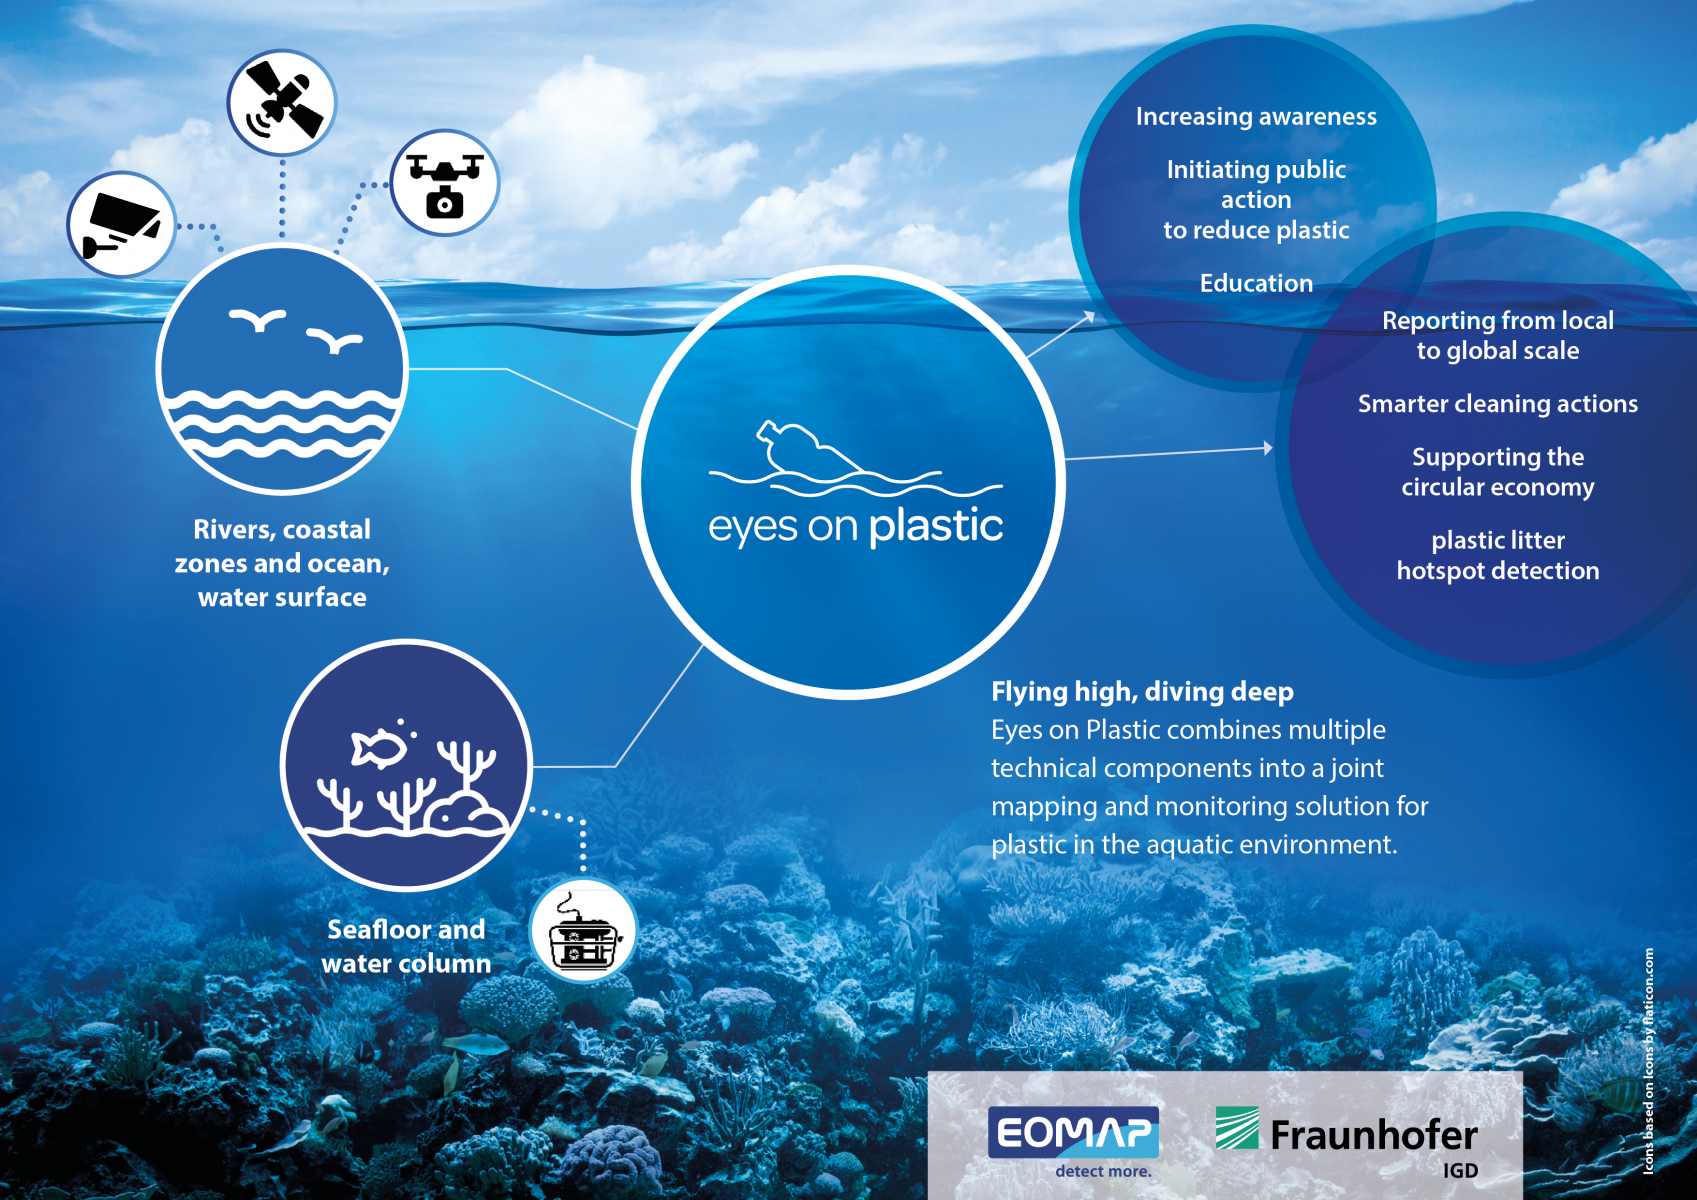 Image credit: EOMAP/Fraunhofer IGD, Project : Eyes on Plastic